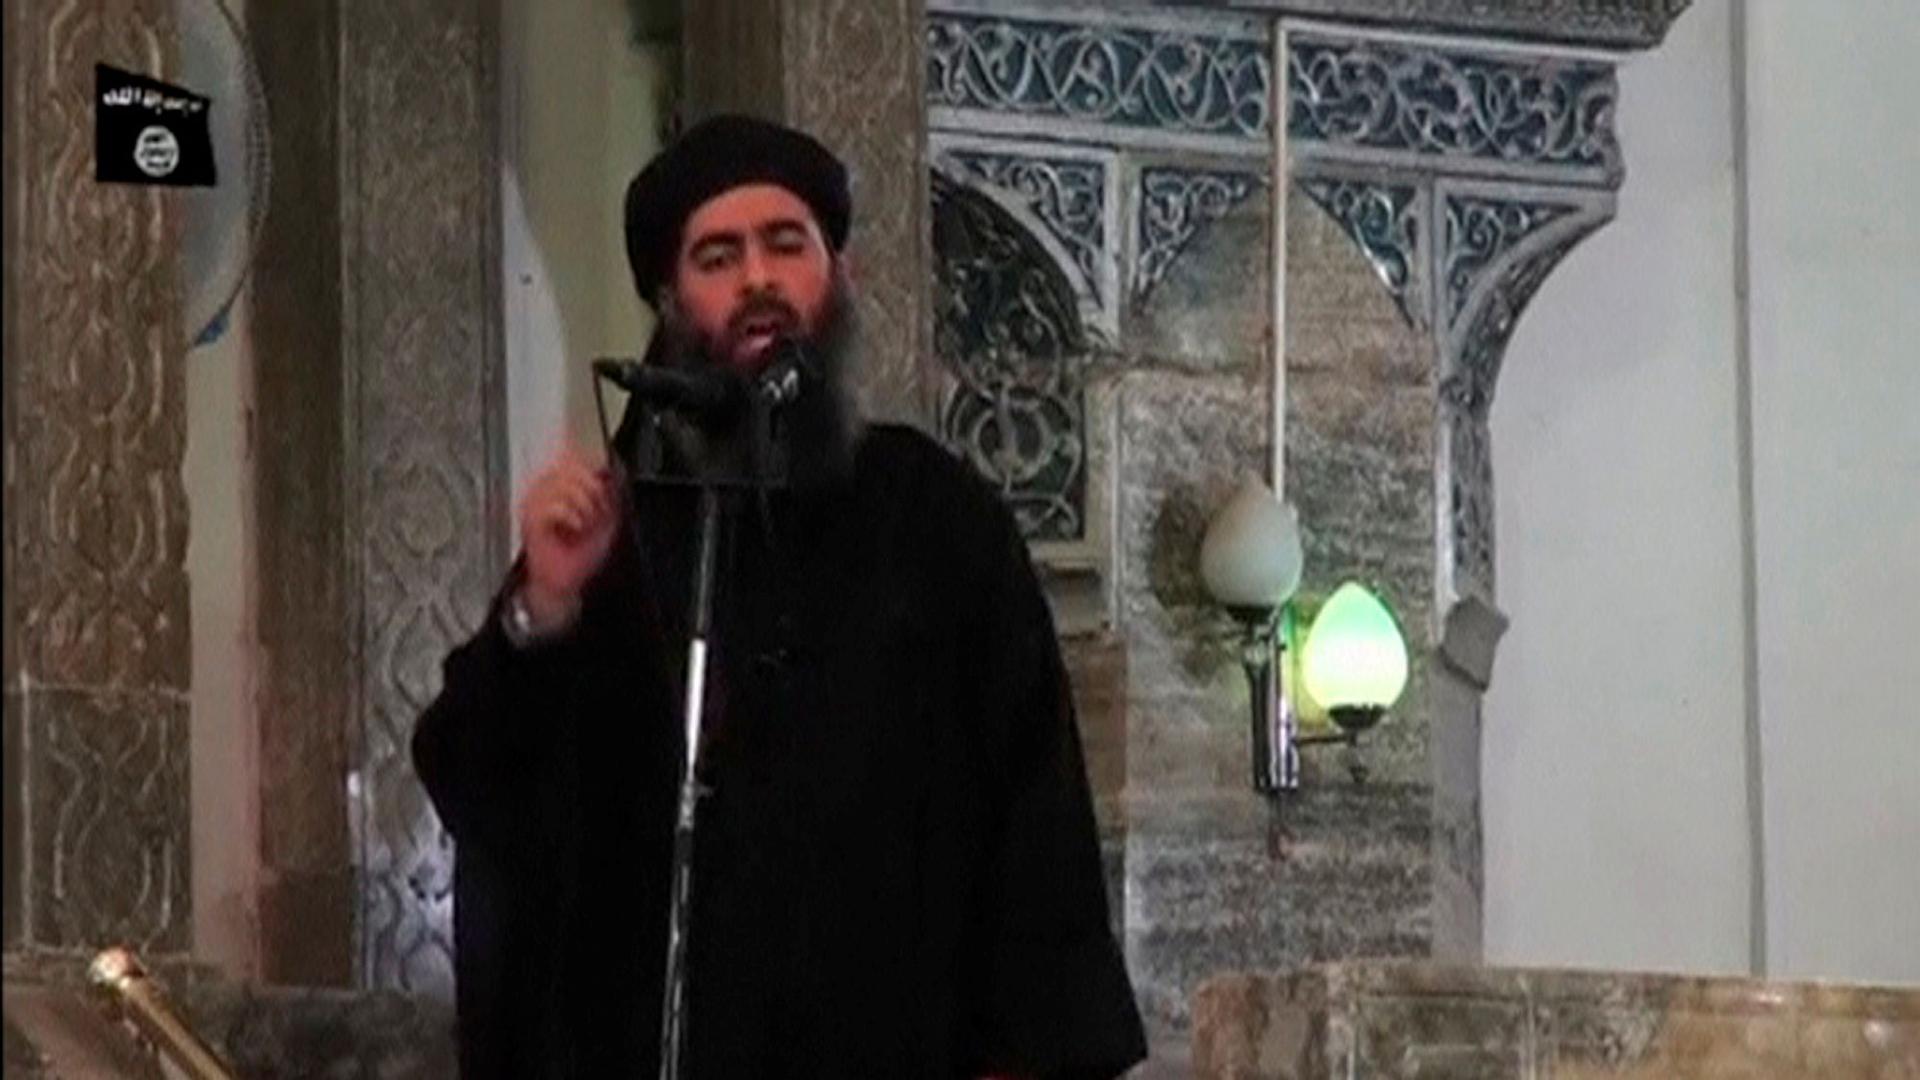 Abu Bakr al-Baghdadi is shown in a black shawl and turbine speaking into a microphone.